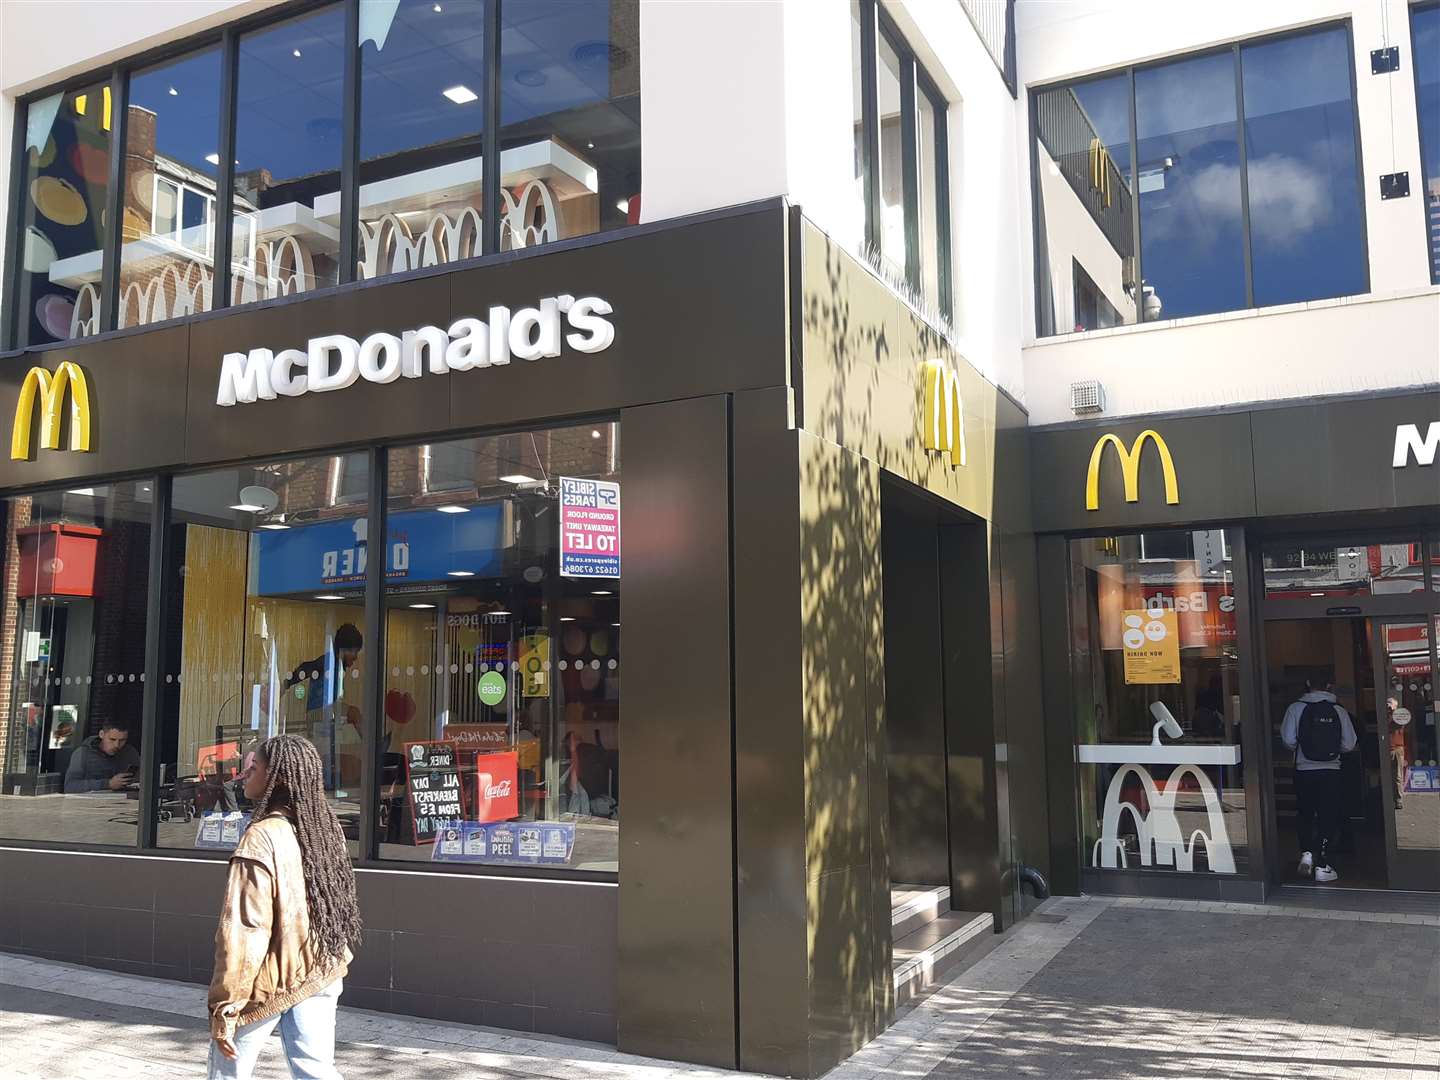 McDonalds has almost become a Week Street veteran